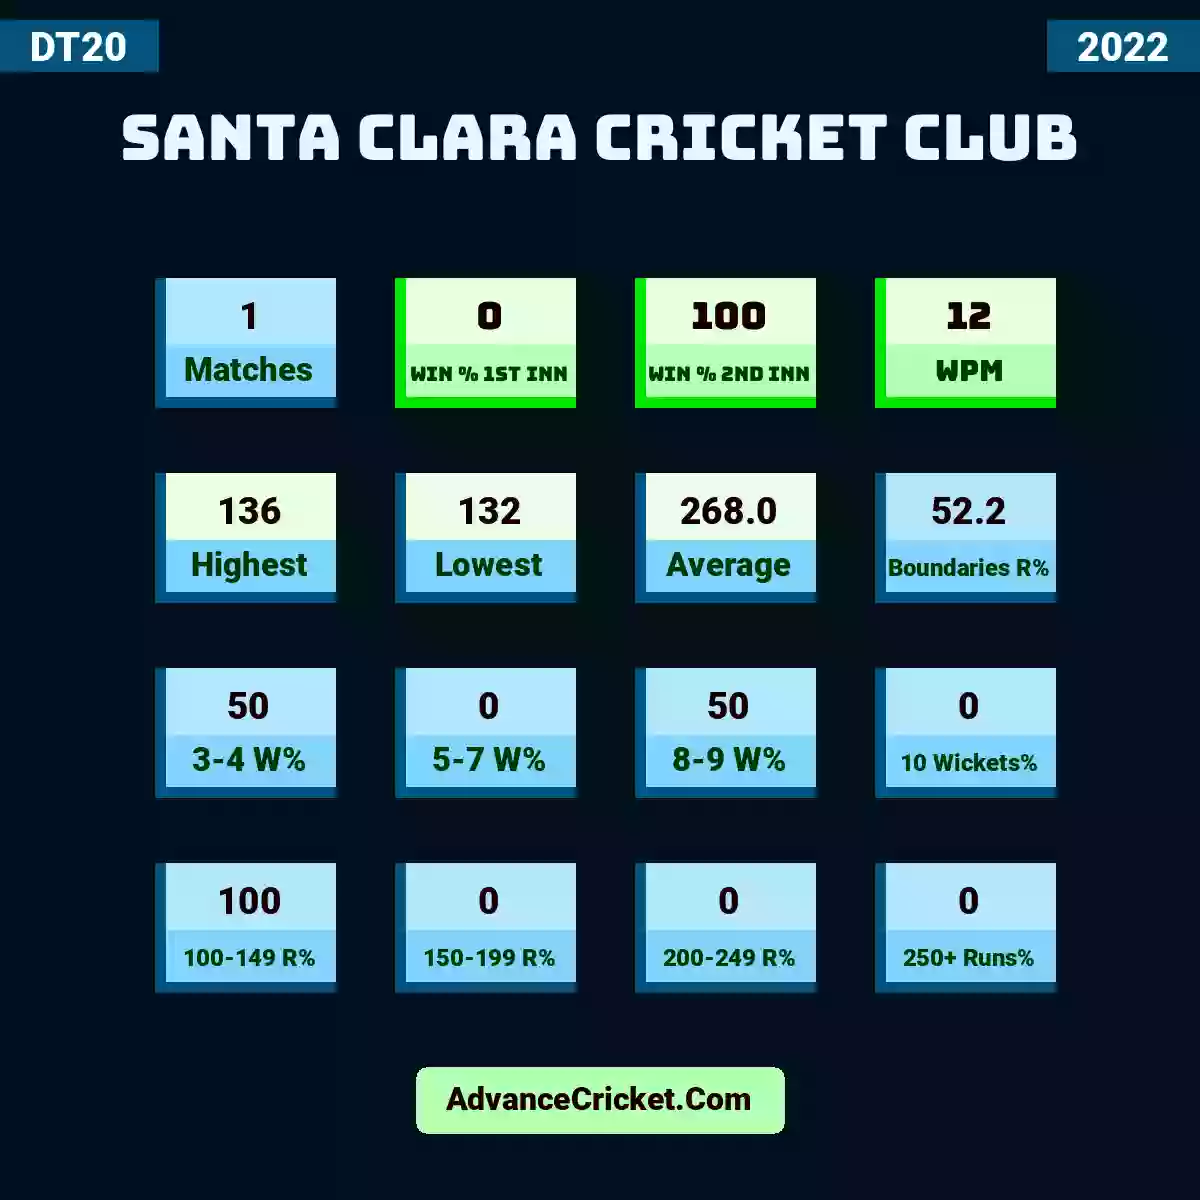 Image showing Santa Clara Cricket Club with Matches: 1, Win % 1st Inn: 0, Win % 2nd Inn: 100, WPM: 12, Highest: 136, Lowest: 132, Average: 268.0, Boundaries R%: 52.2, 3-4 W%: 50, 5-7 W%: 0, 8-9 W%: 50, 10 Wickets%: 0, 100-149 R%: 100, 150-199 R%: 0, 200-249 R%: 0, 250+ Runs%: 0.